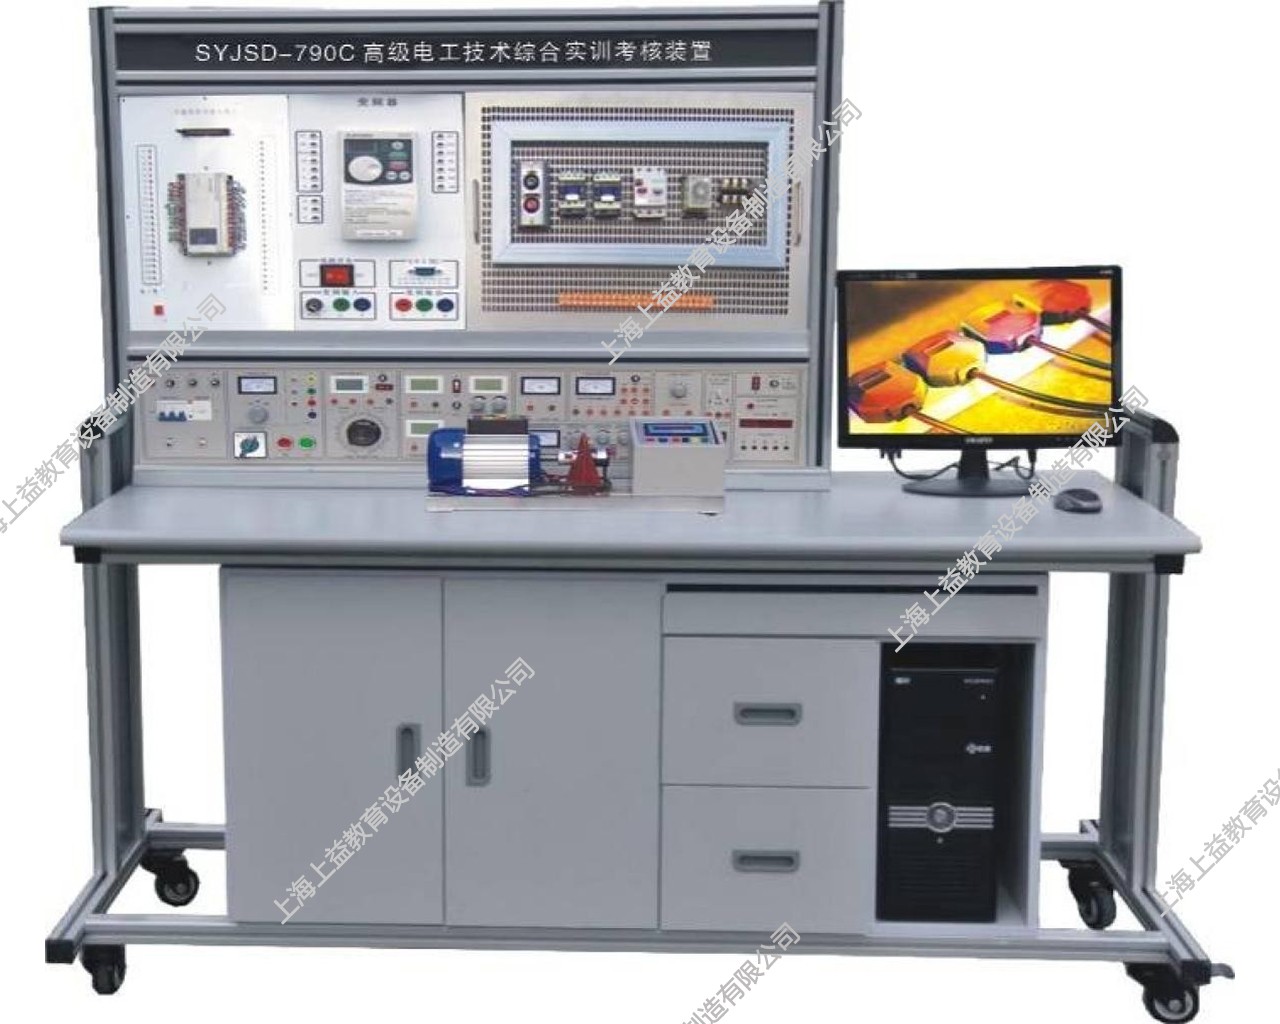 SYJSD-790C高級電工技術綜合實訓考核裝置